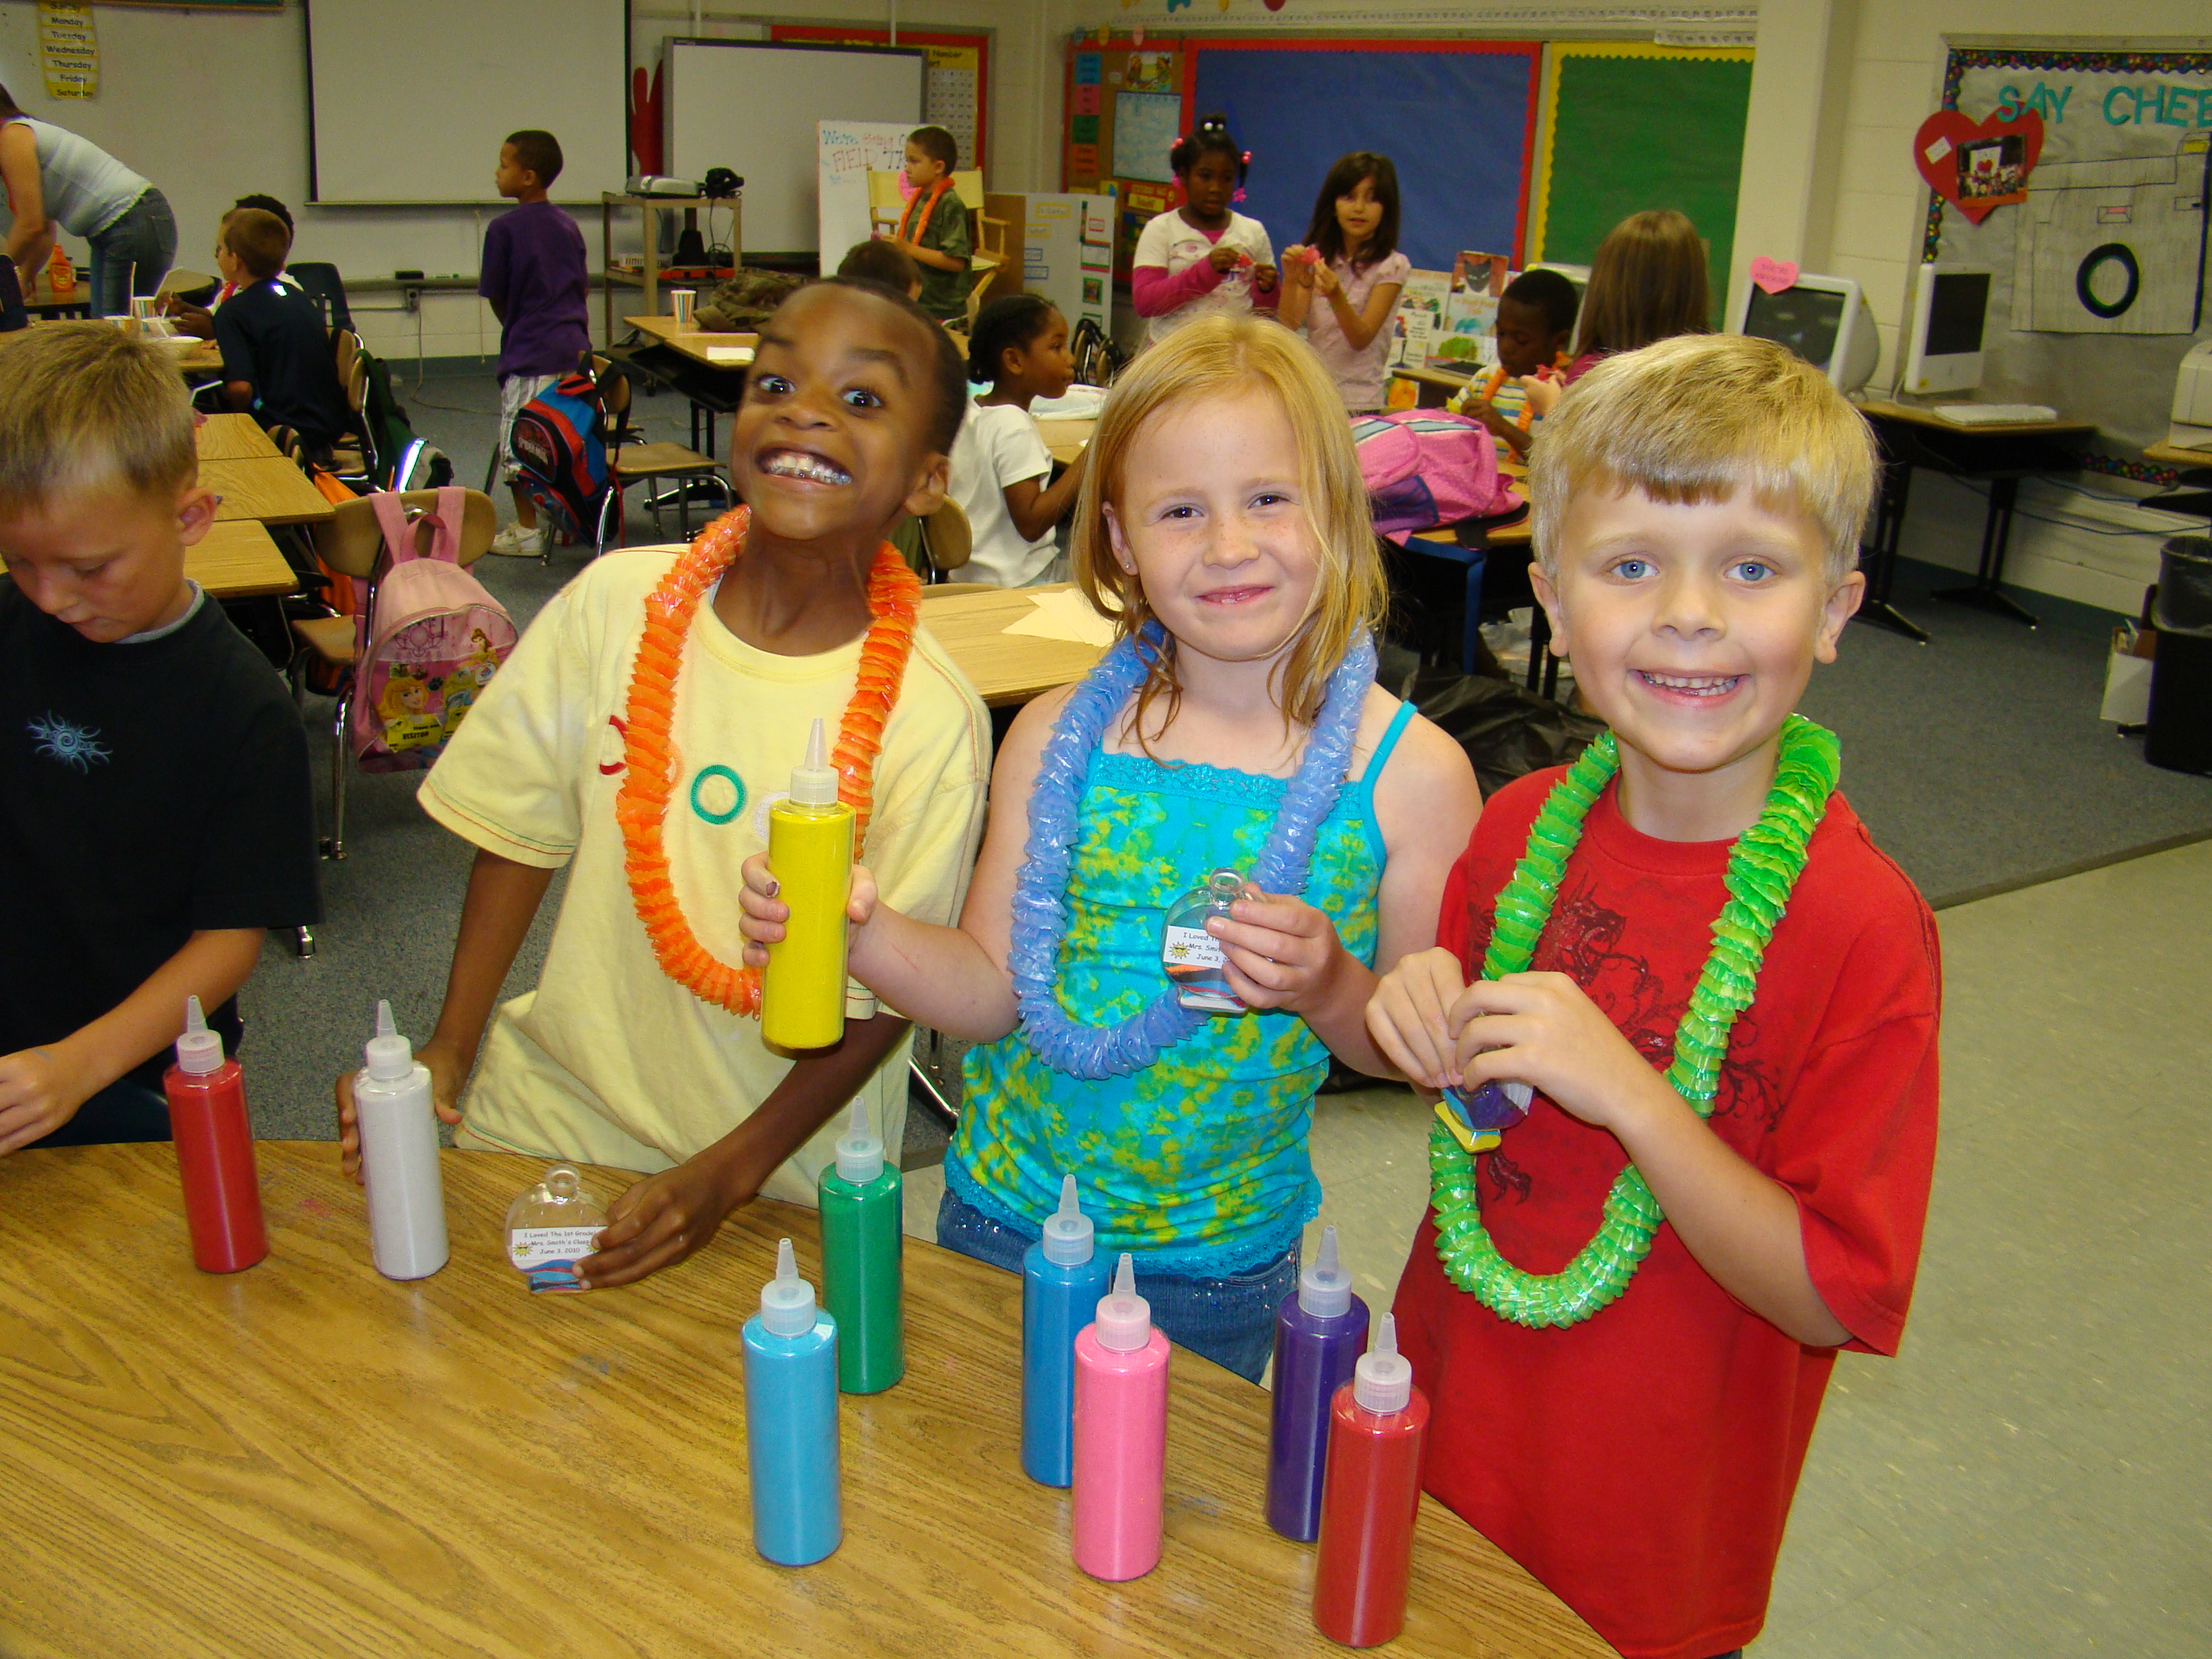 Arts and crafts help child development